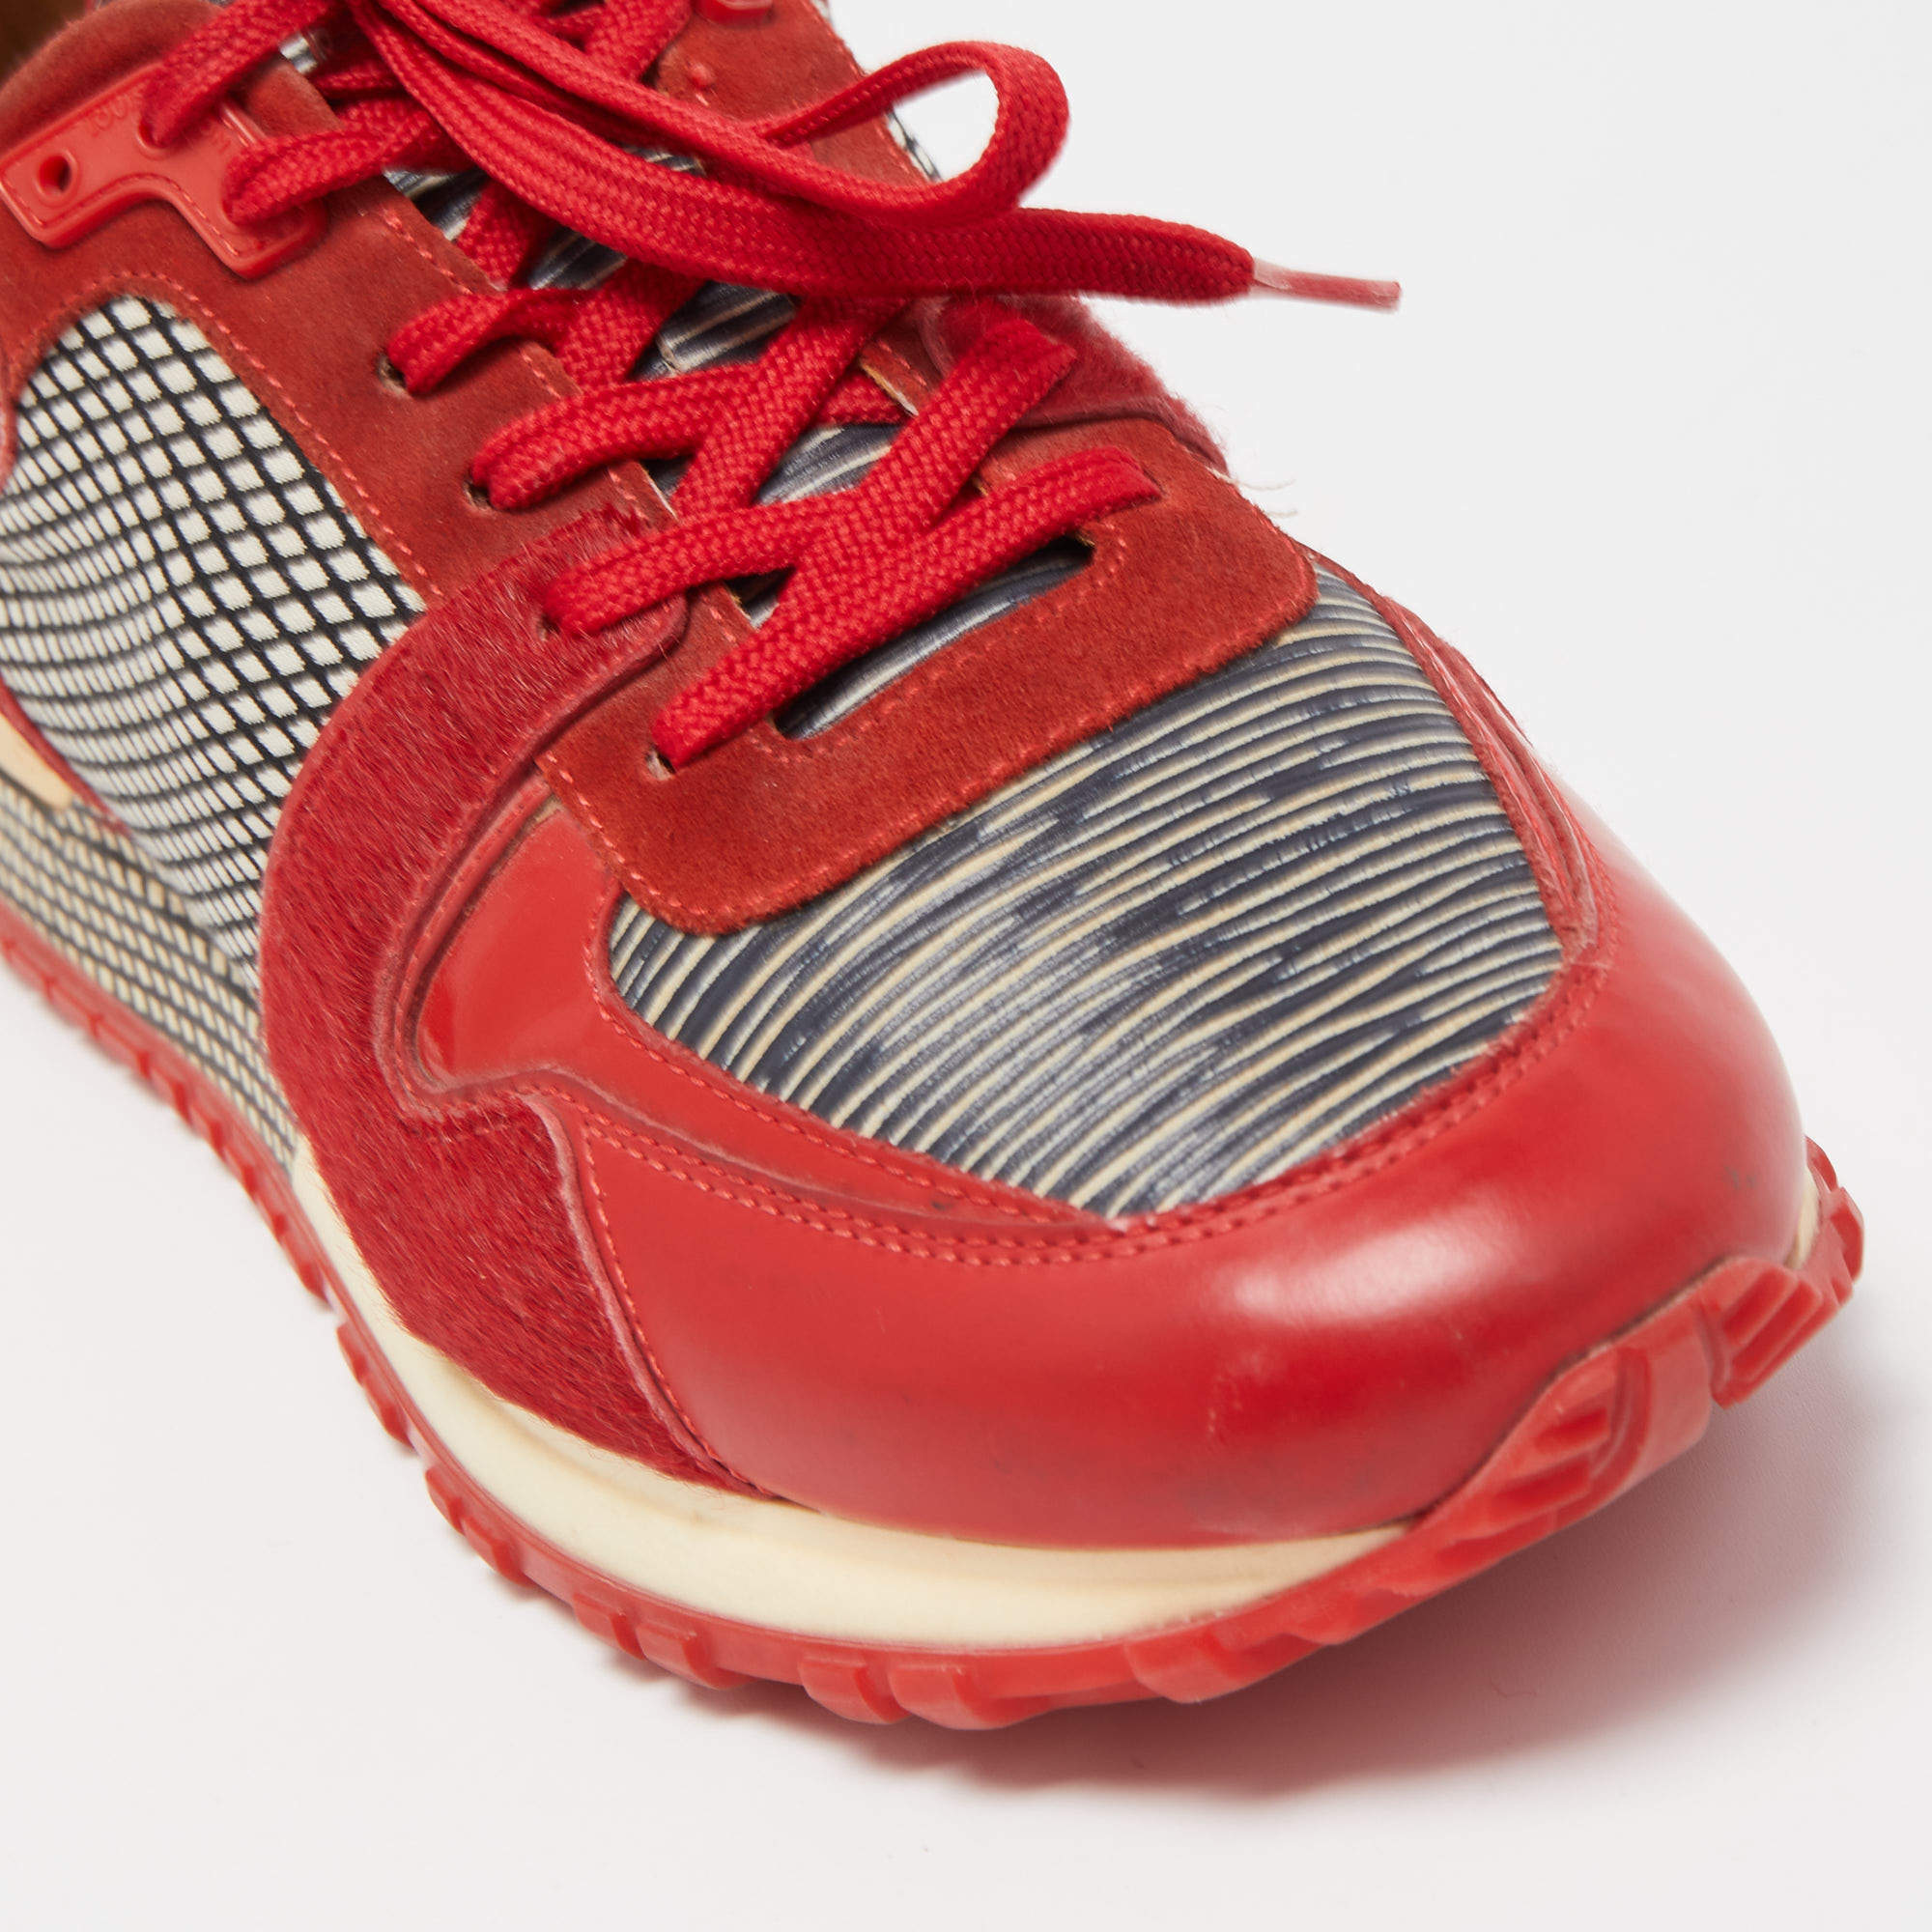 Louis Vuitton Red Suede and Calf Hair Run Away Sneakers Size 38.5 Louis  Vuitton